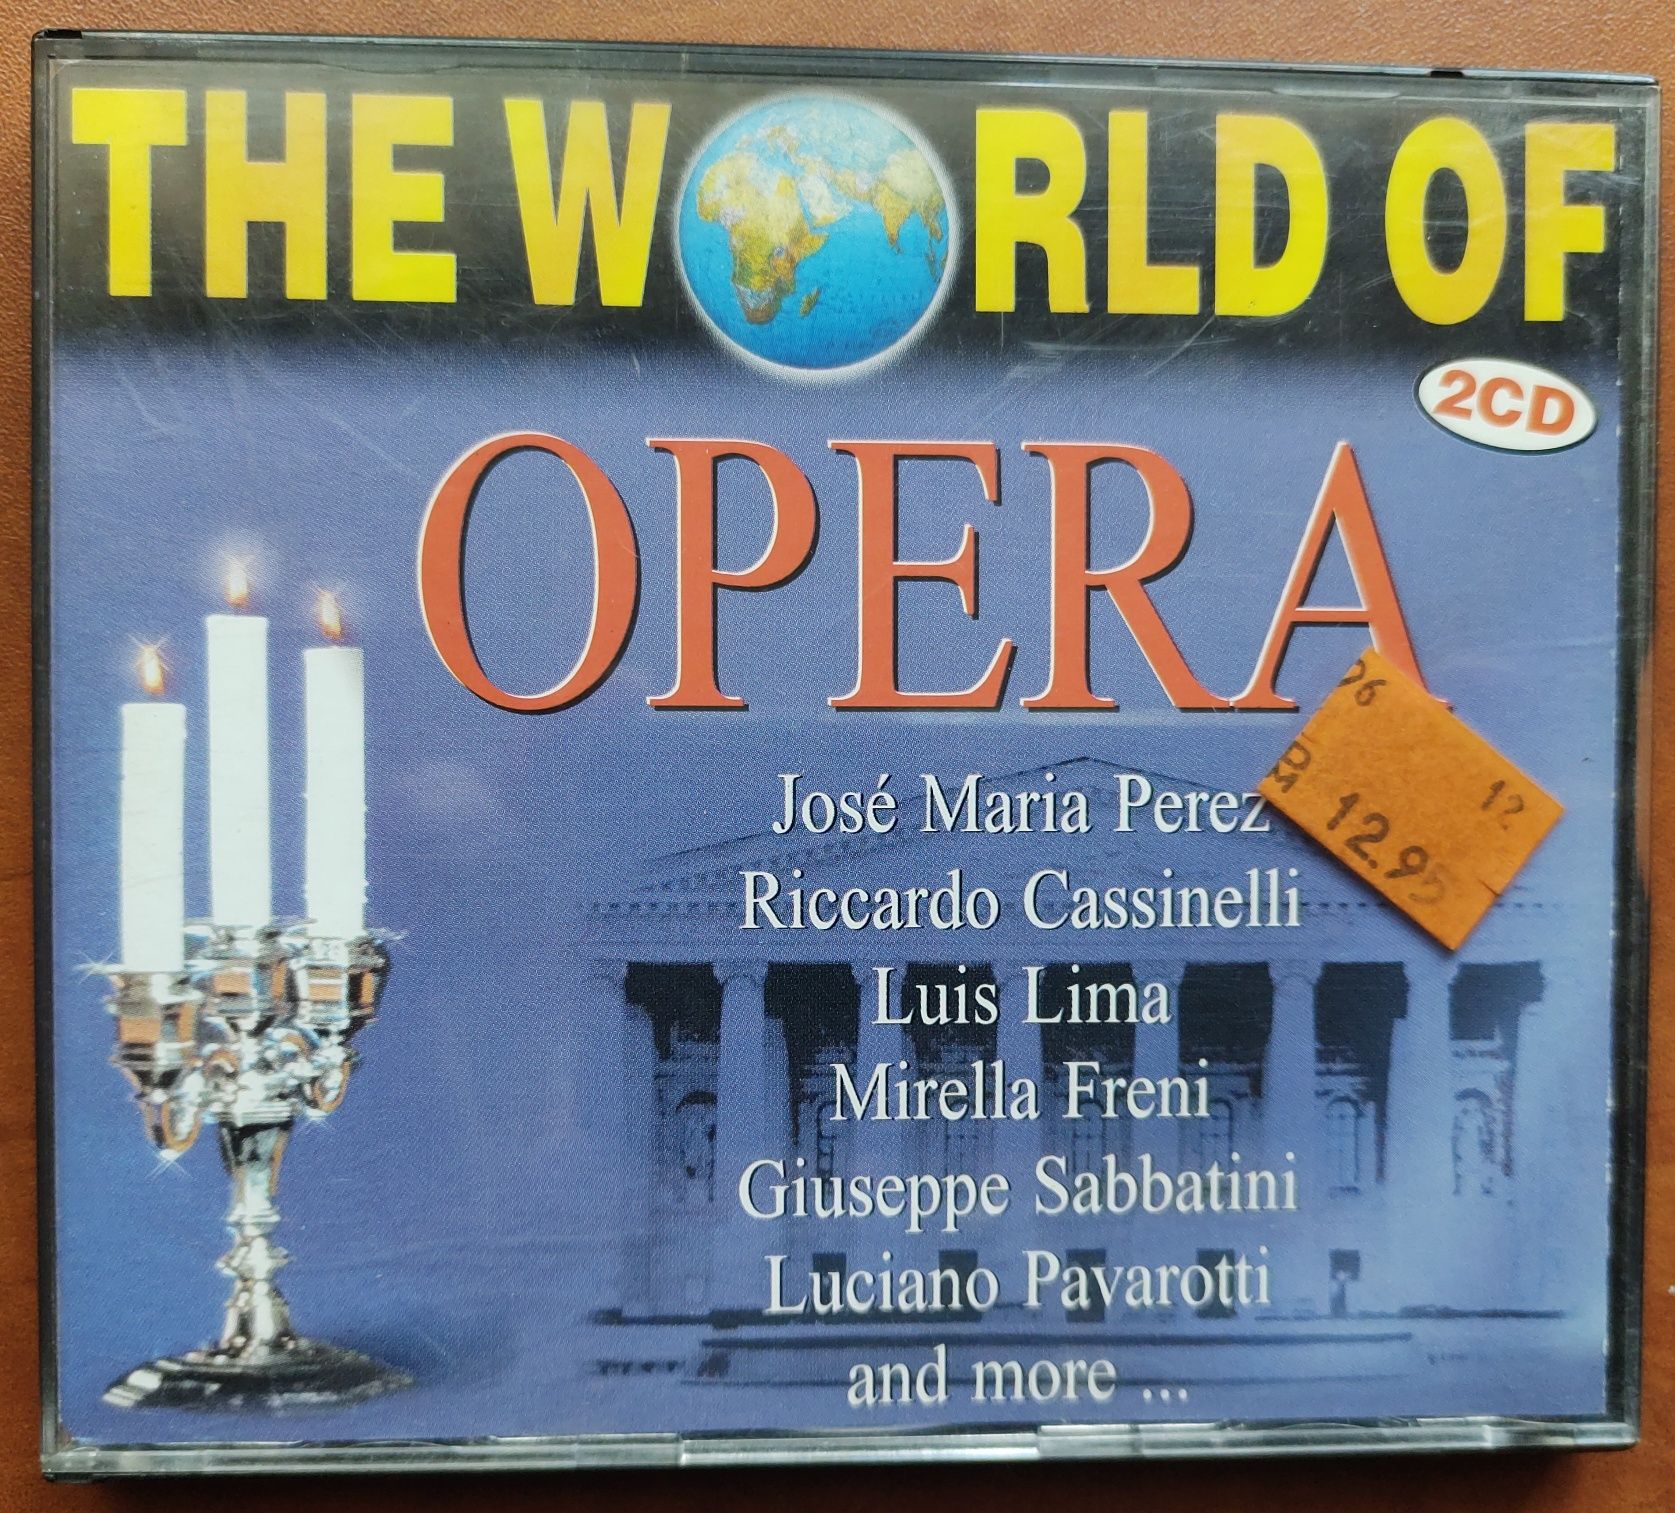 The world of opera CD